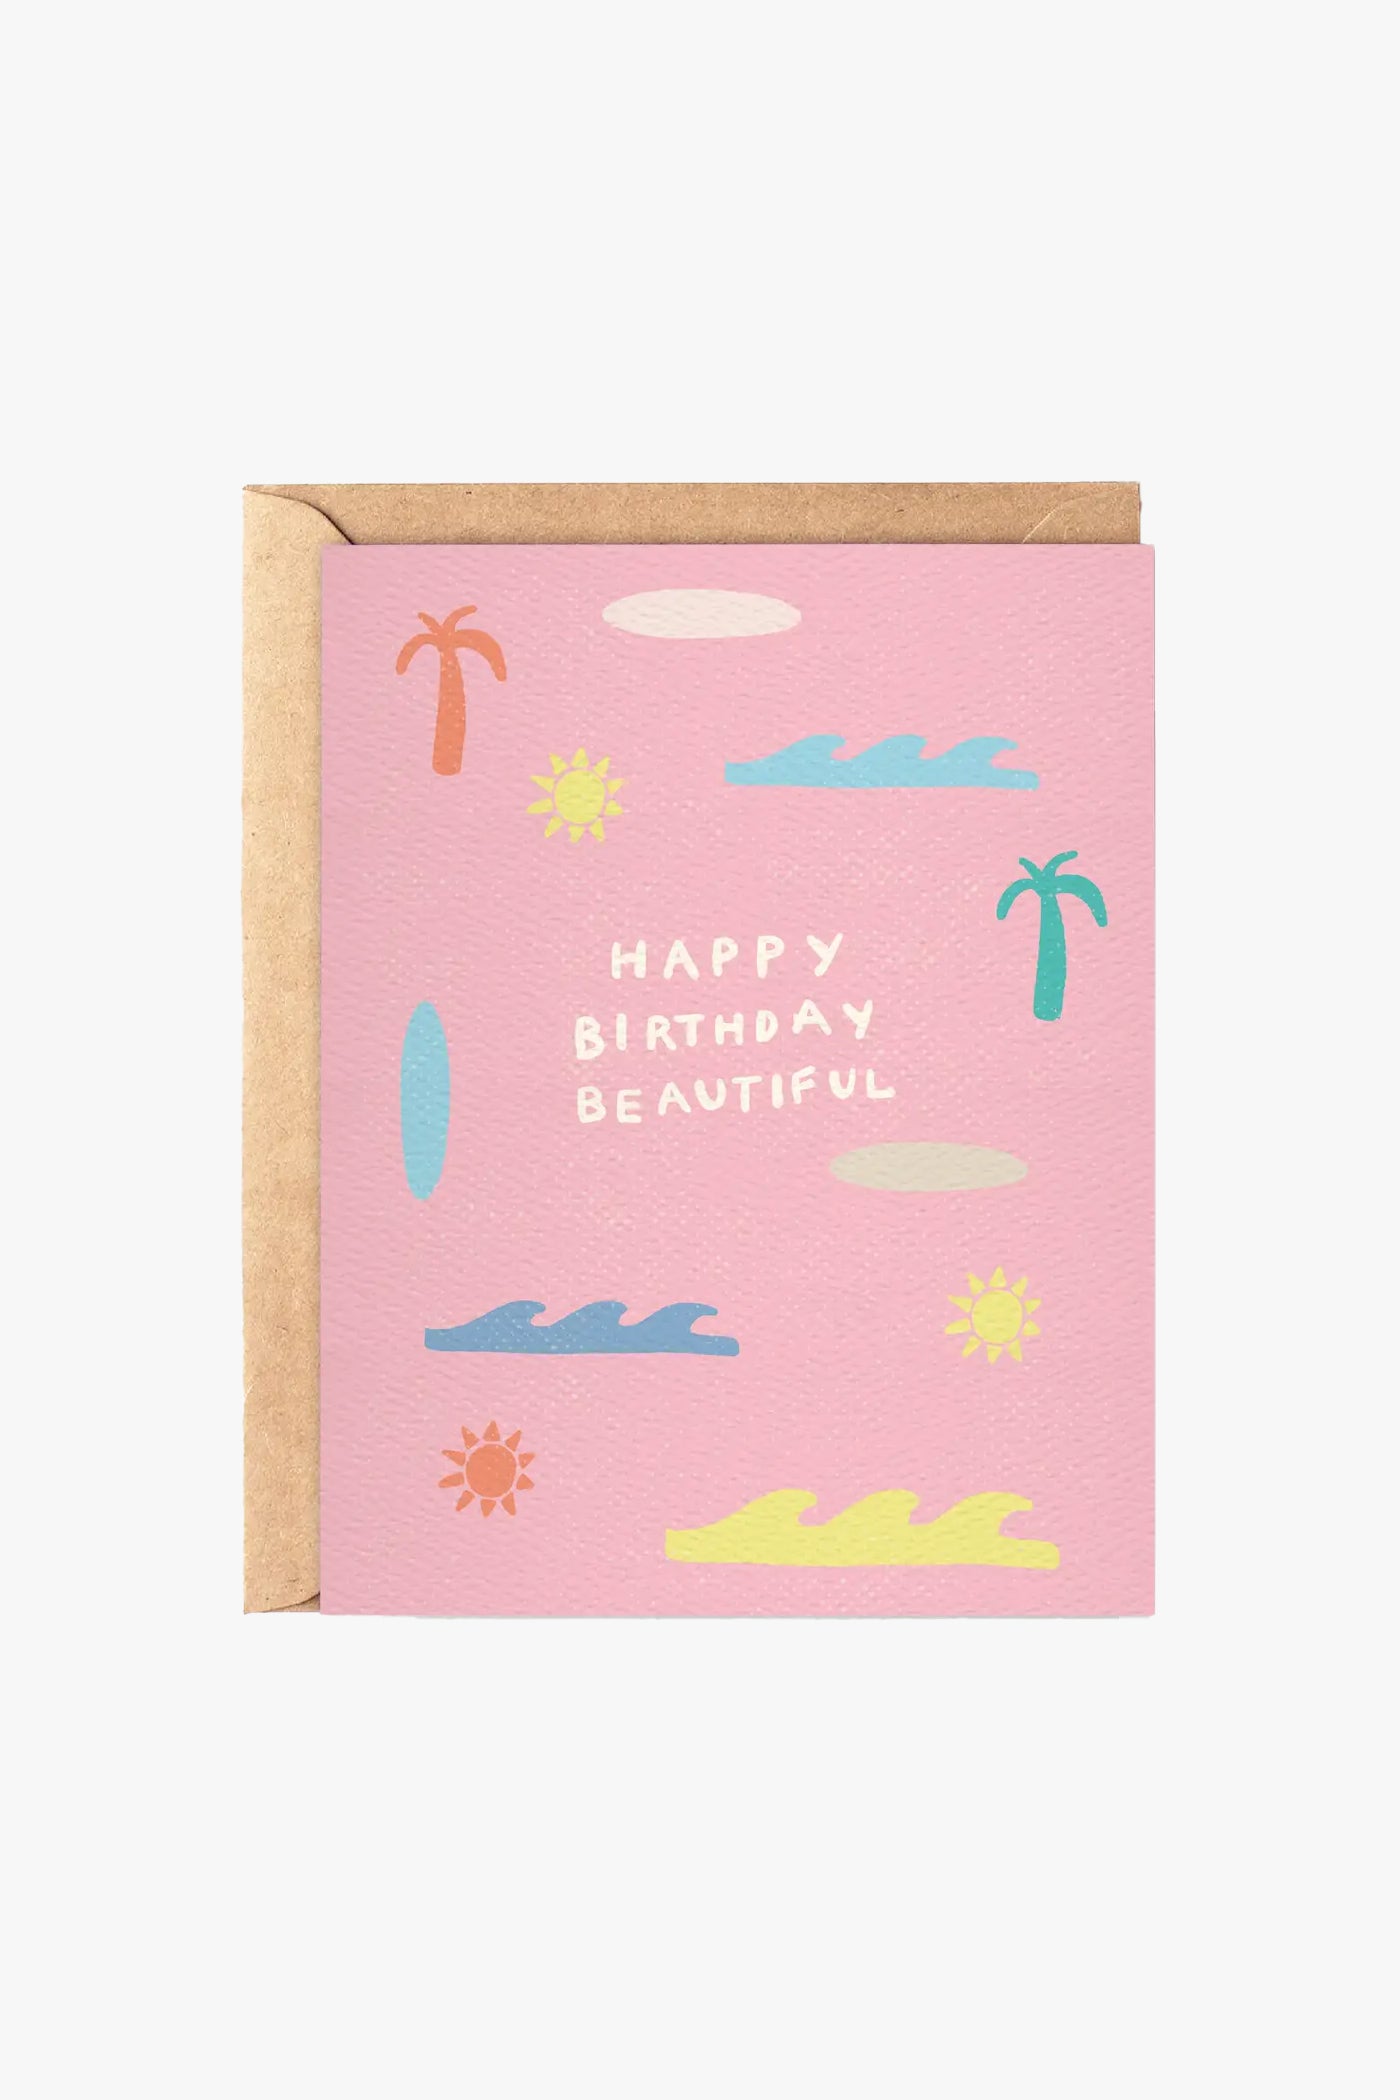 Daydream Prints Happy Birthday Beautiful Card